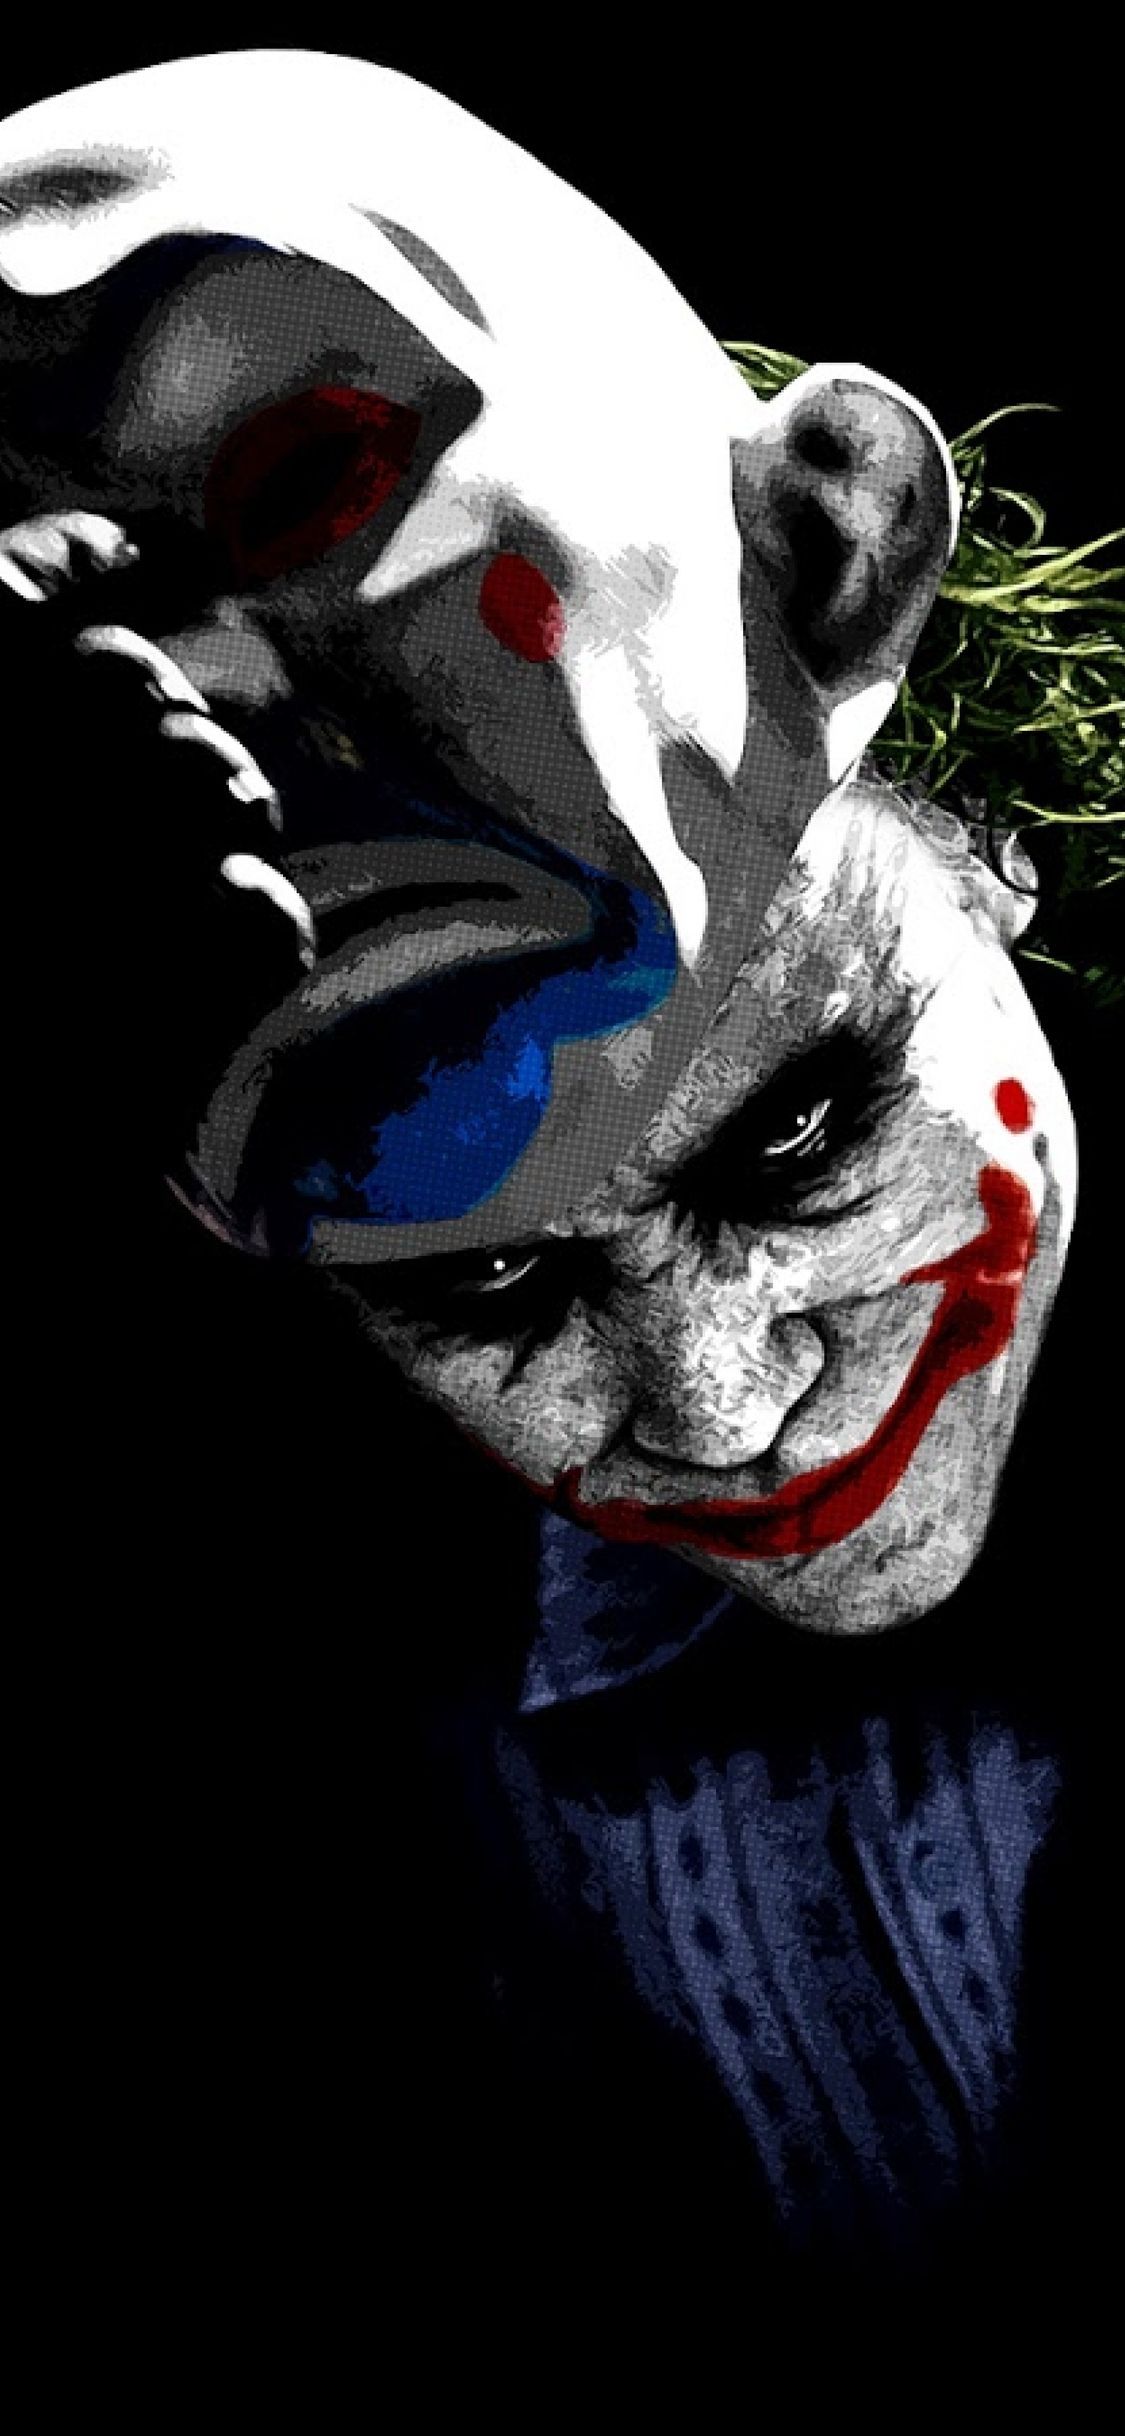  Stylish Joker Wallpapers 4k Ultra HD Download Background Free Download